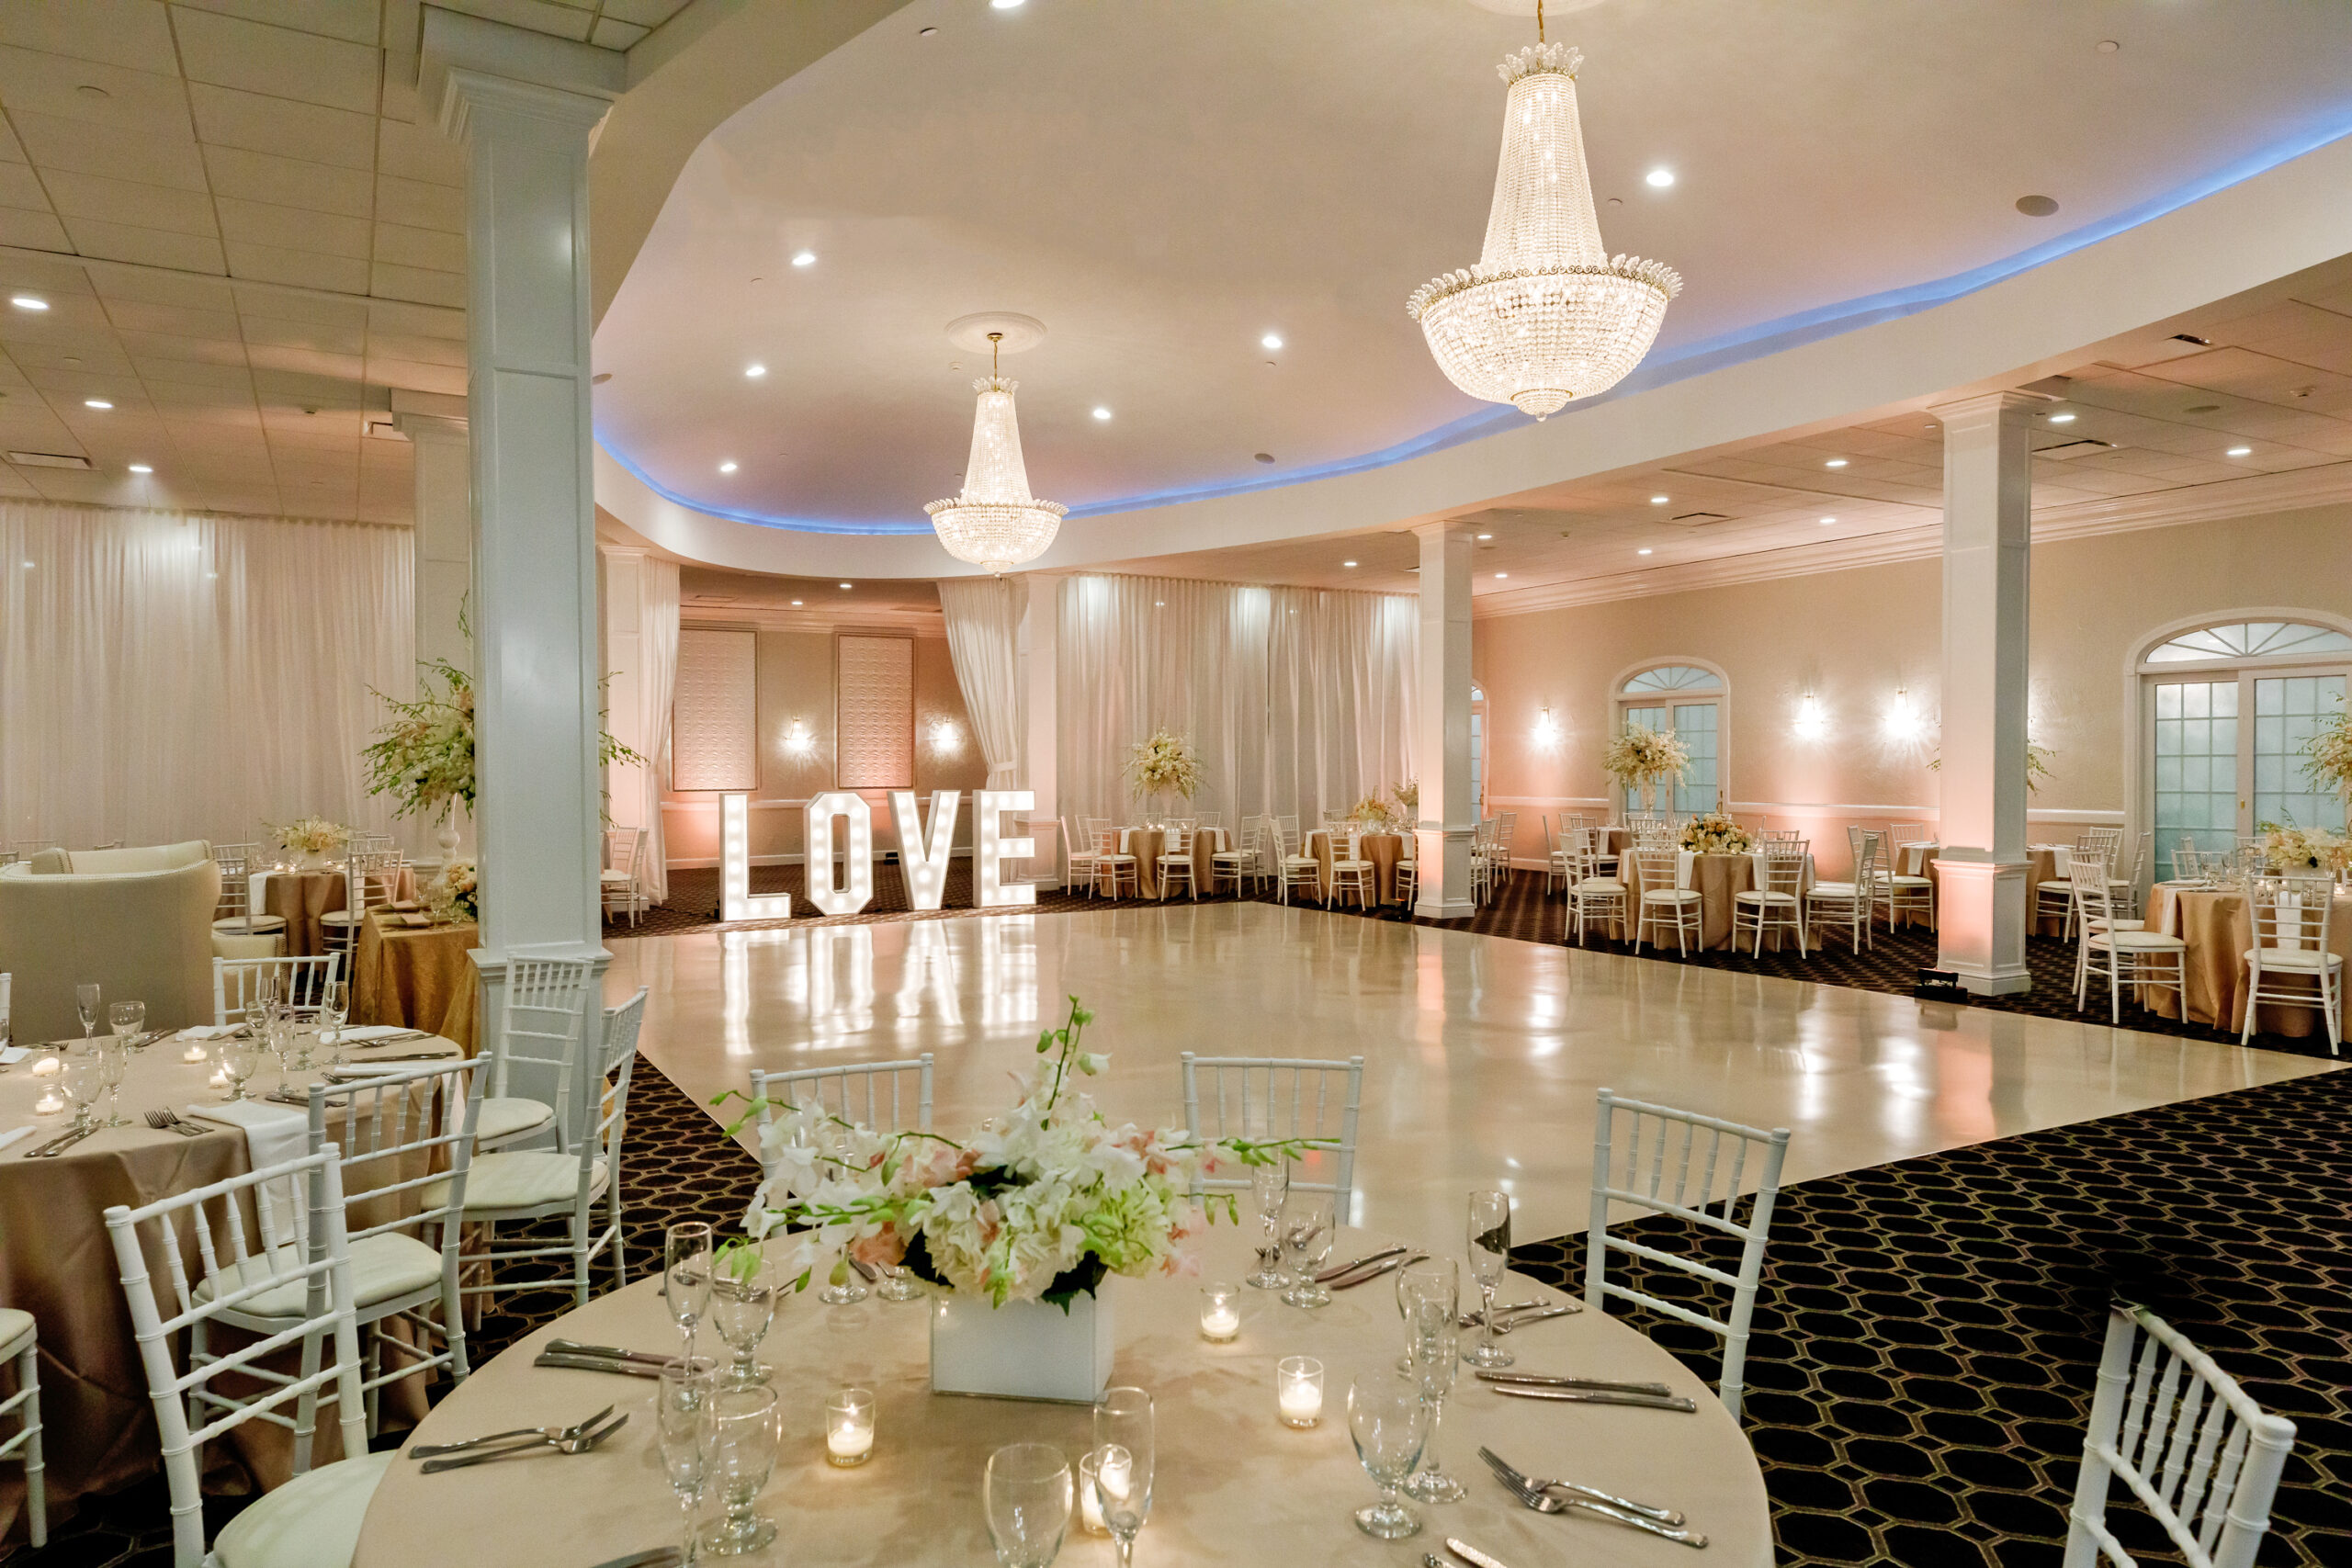 Wedding planning steps include touring a venue like the Avenir Ballroom 